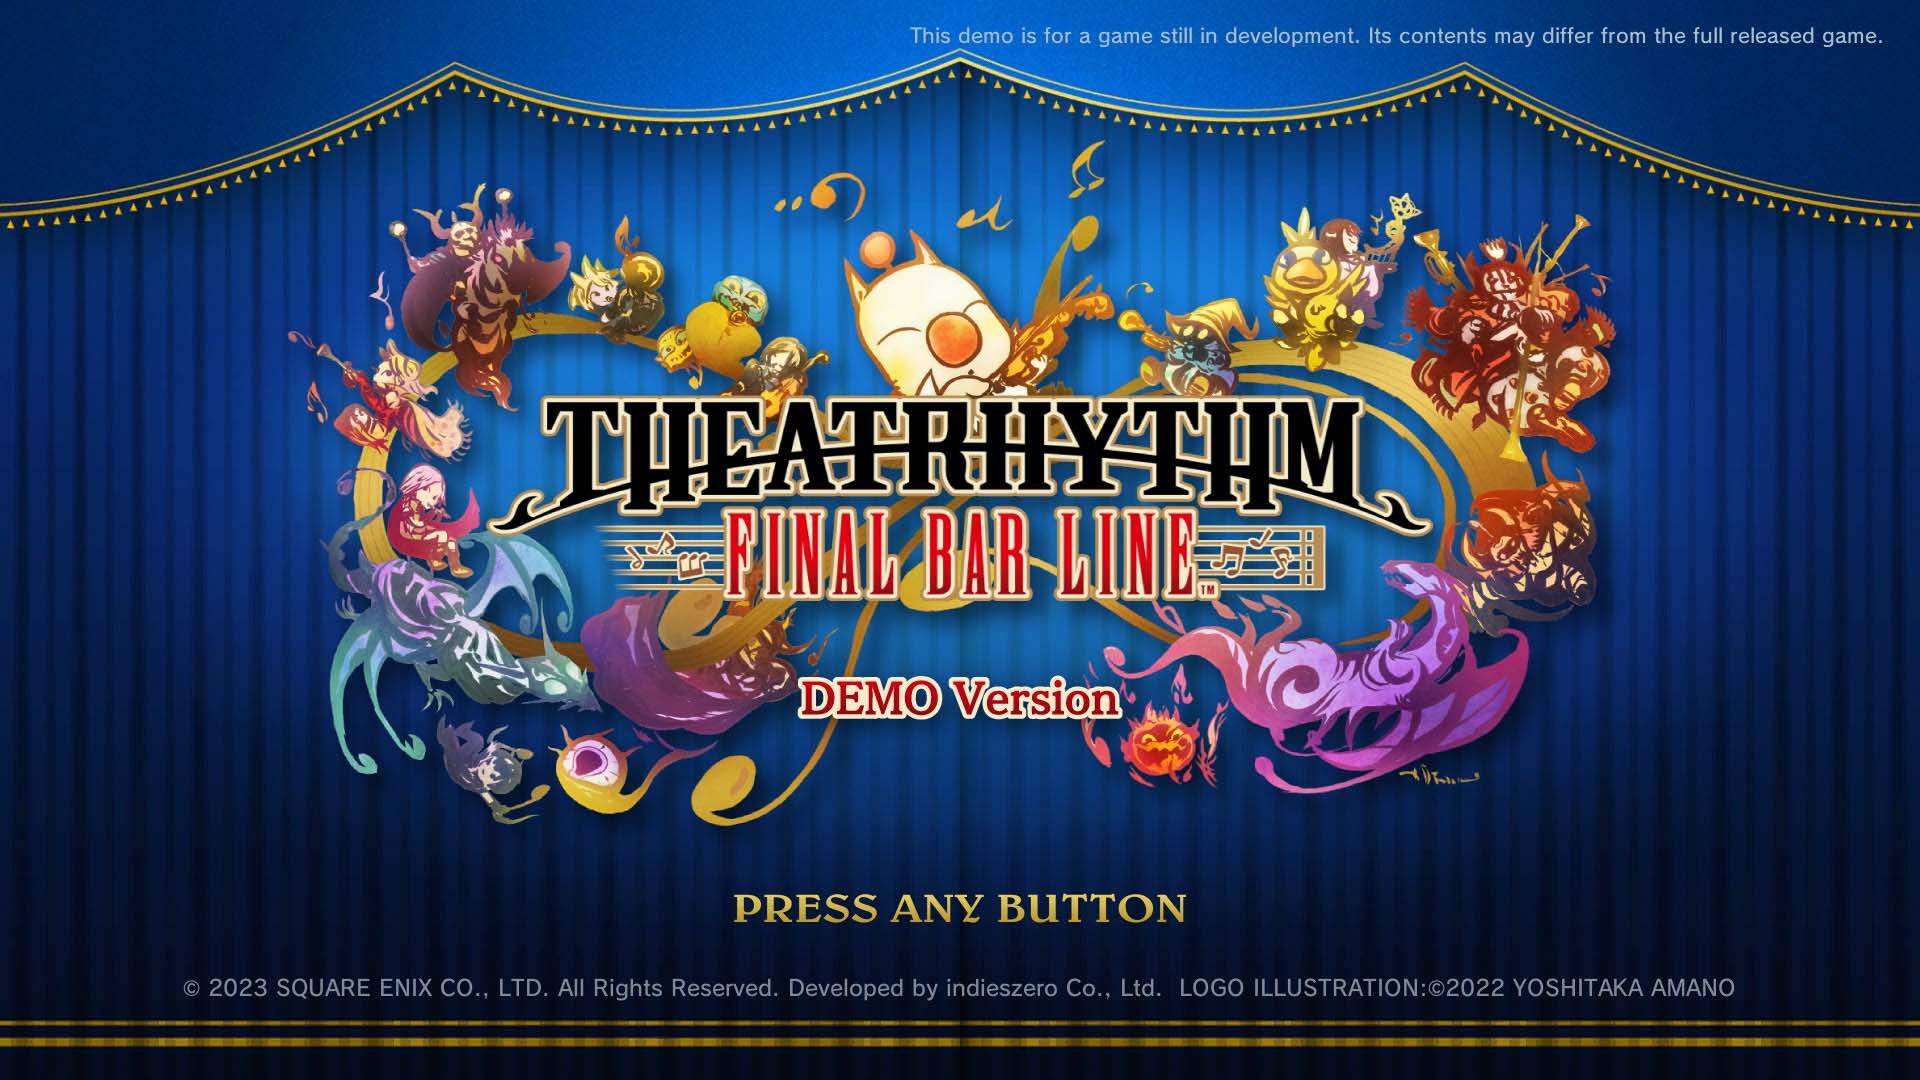 Theatrhythm: Final Bar Line is getting a playable demo